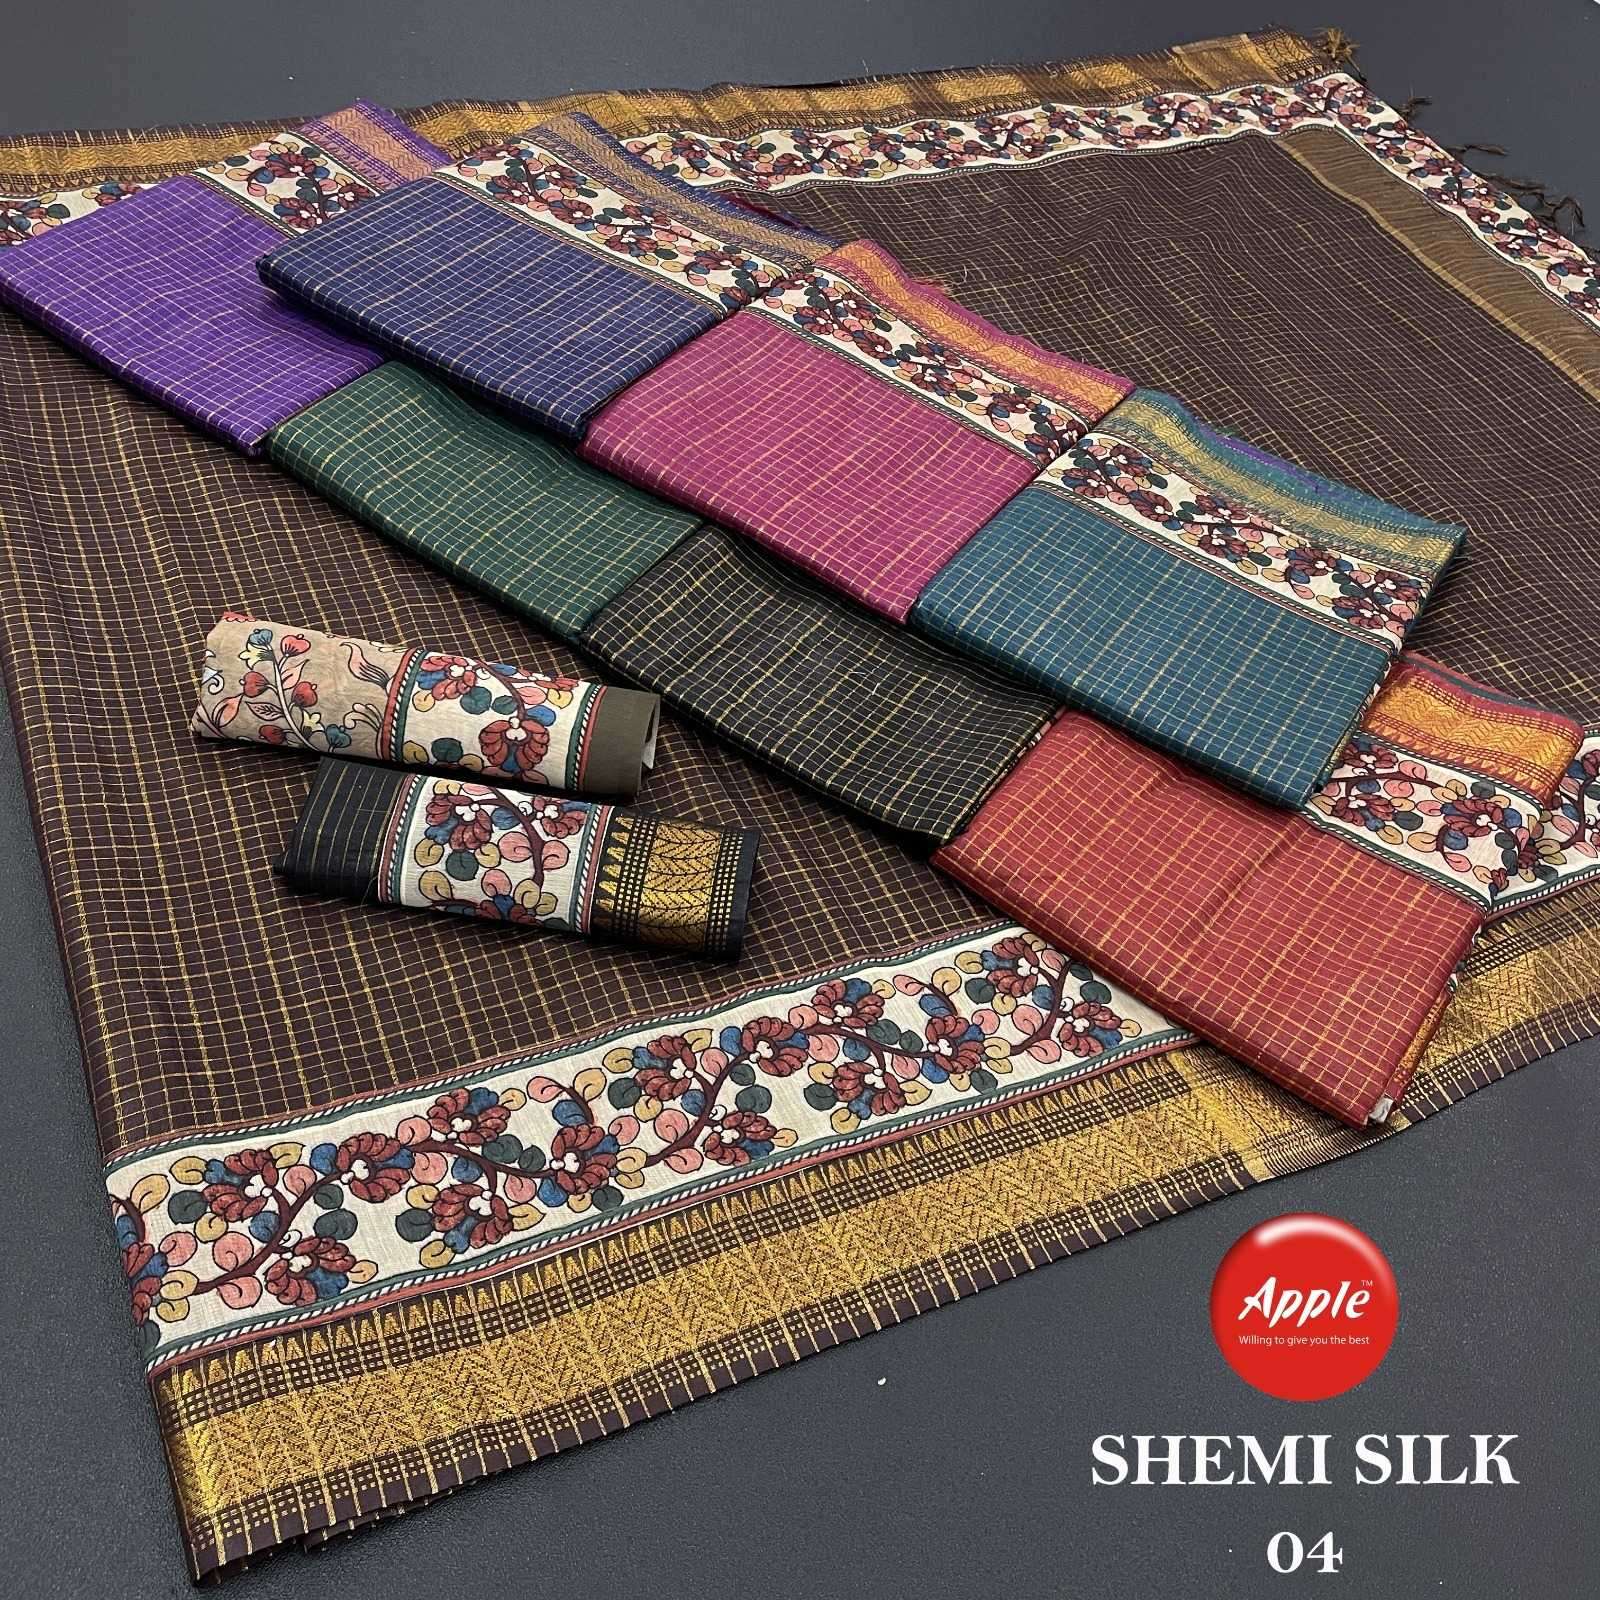 apple shemi silk series 01-04 silk saree